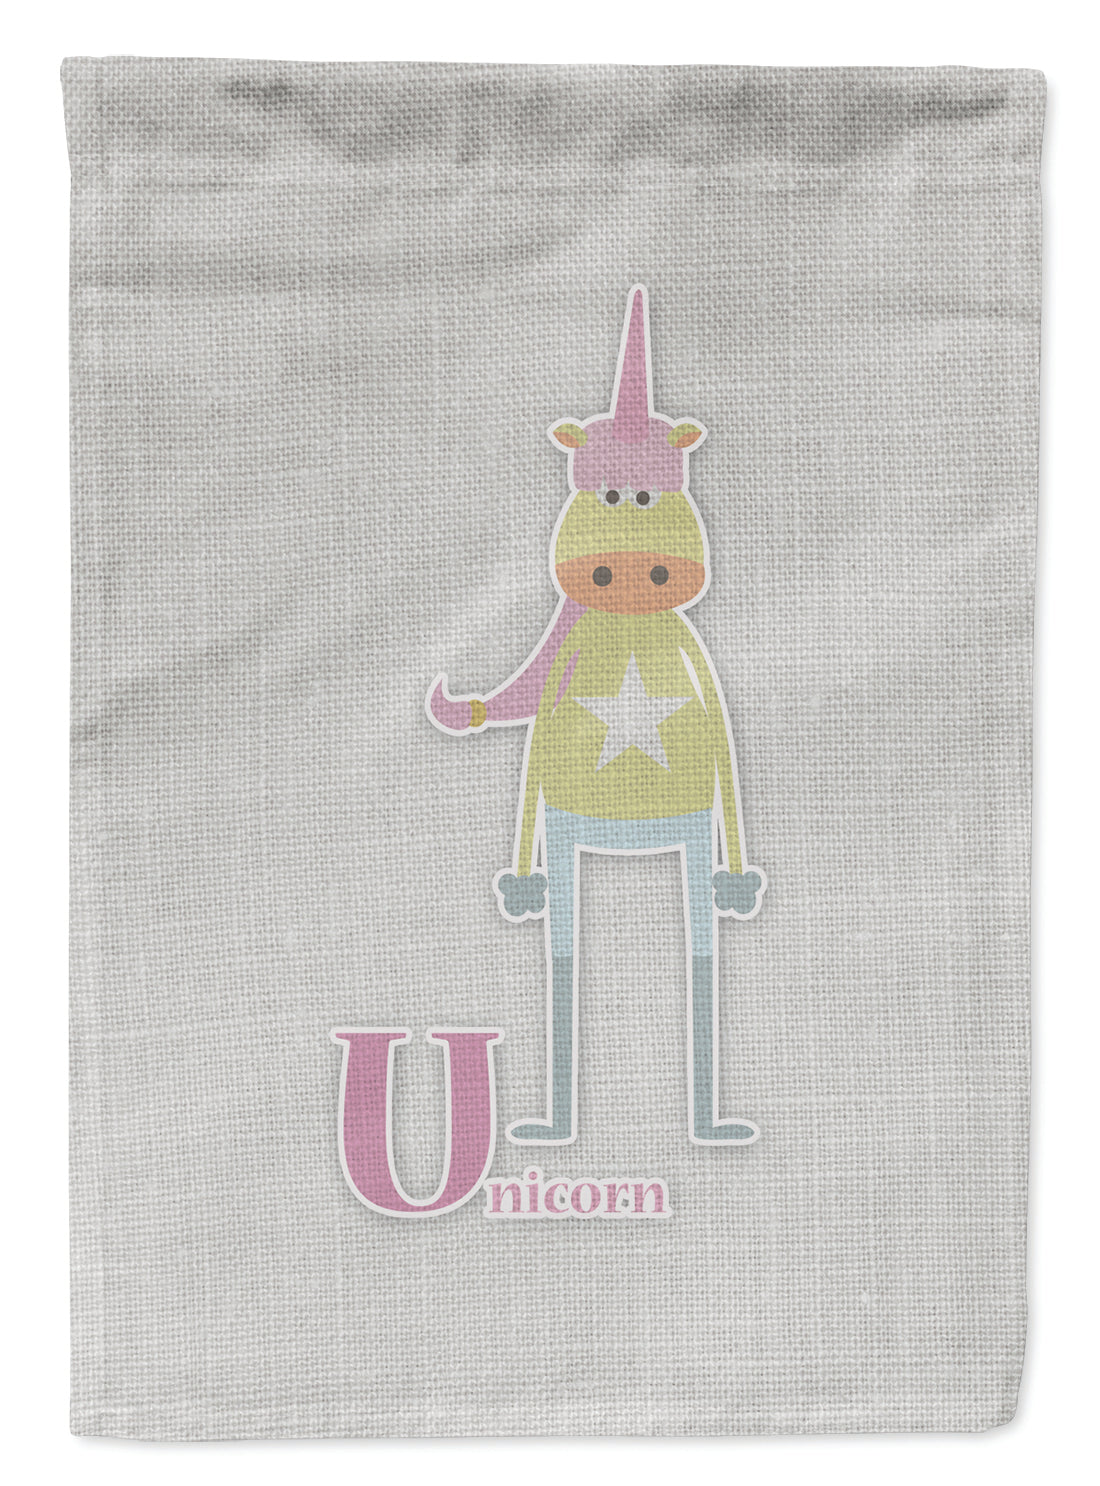 Alphabet U for Unicorn Flag Garden Size BB5746GF